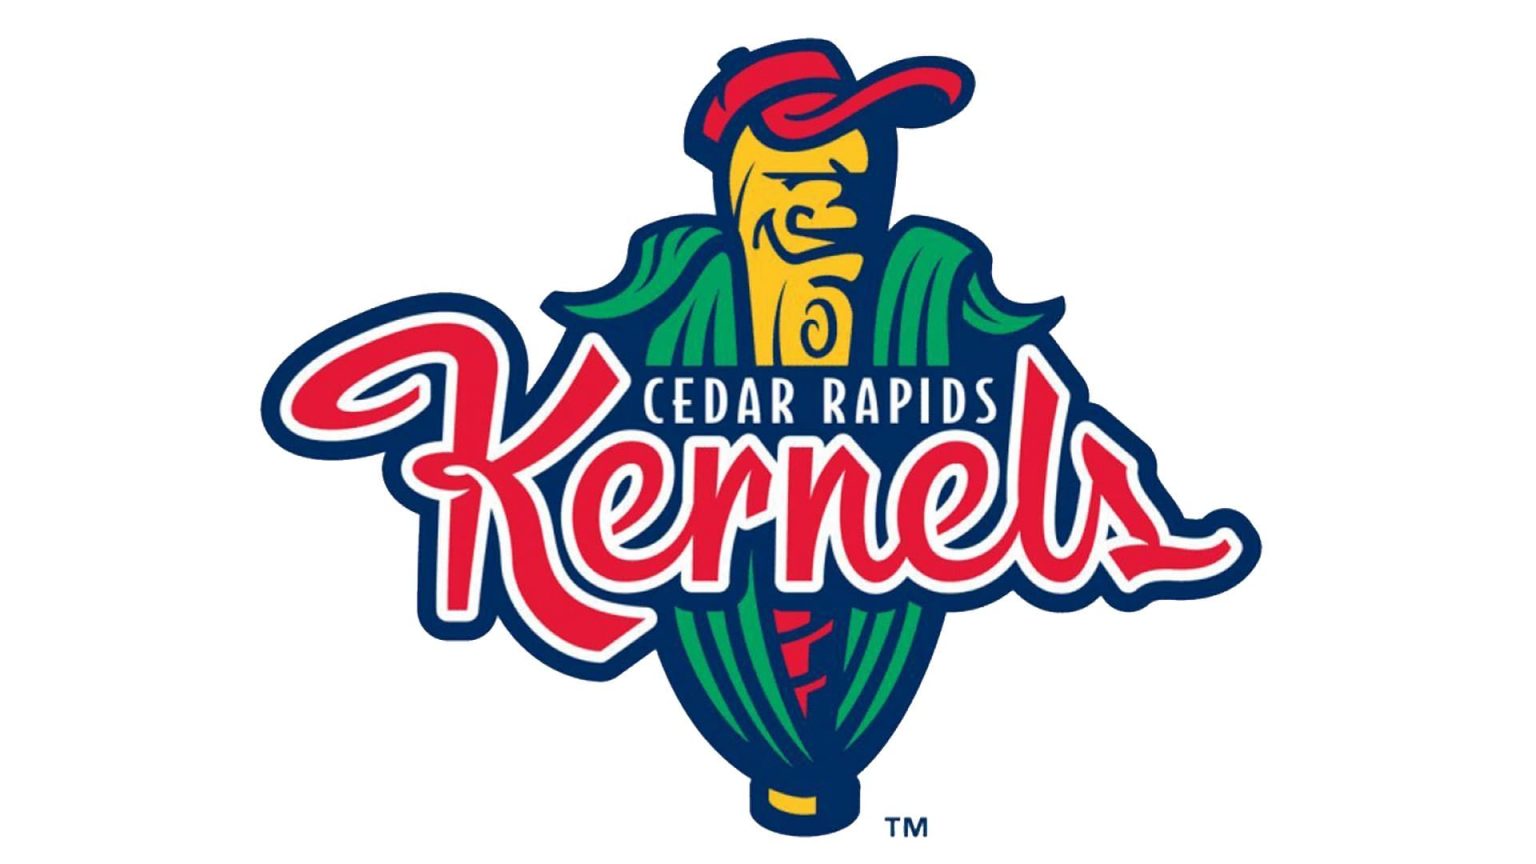 Cedar Rapids Kernels Logo and symbol, meaning, history, PNG, brand